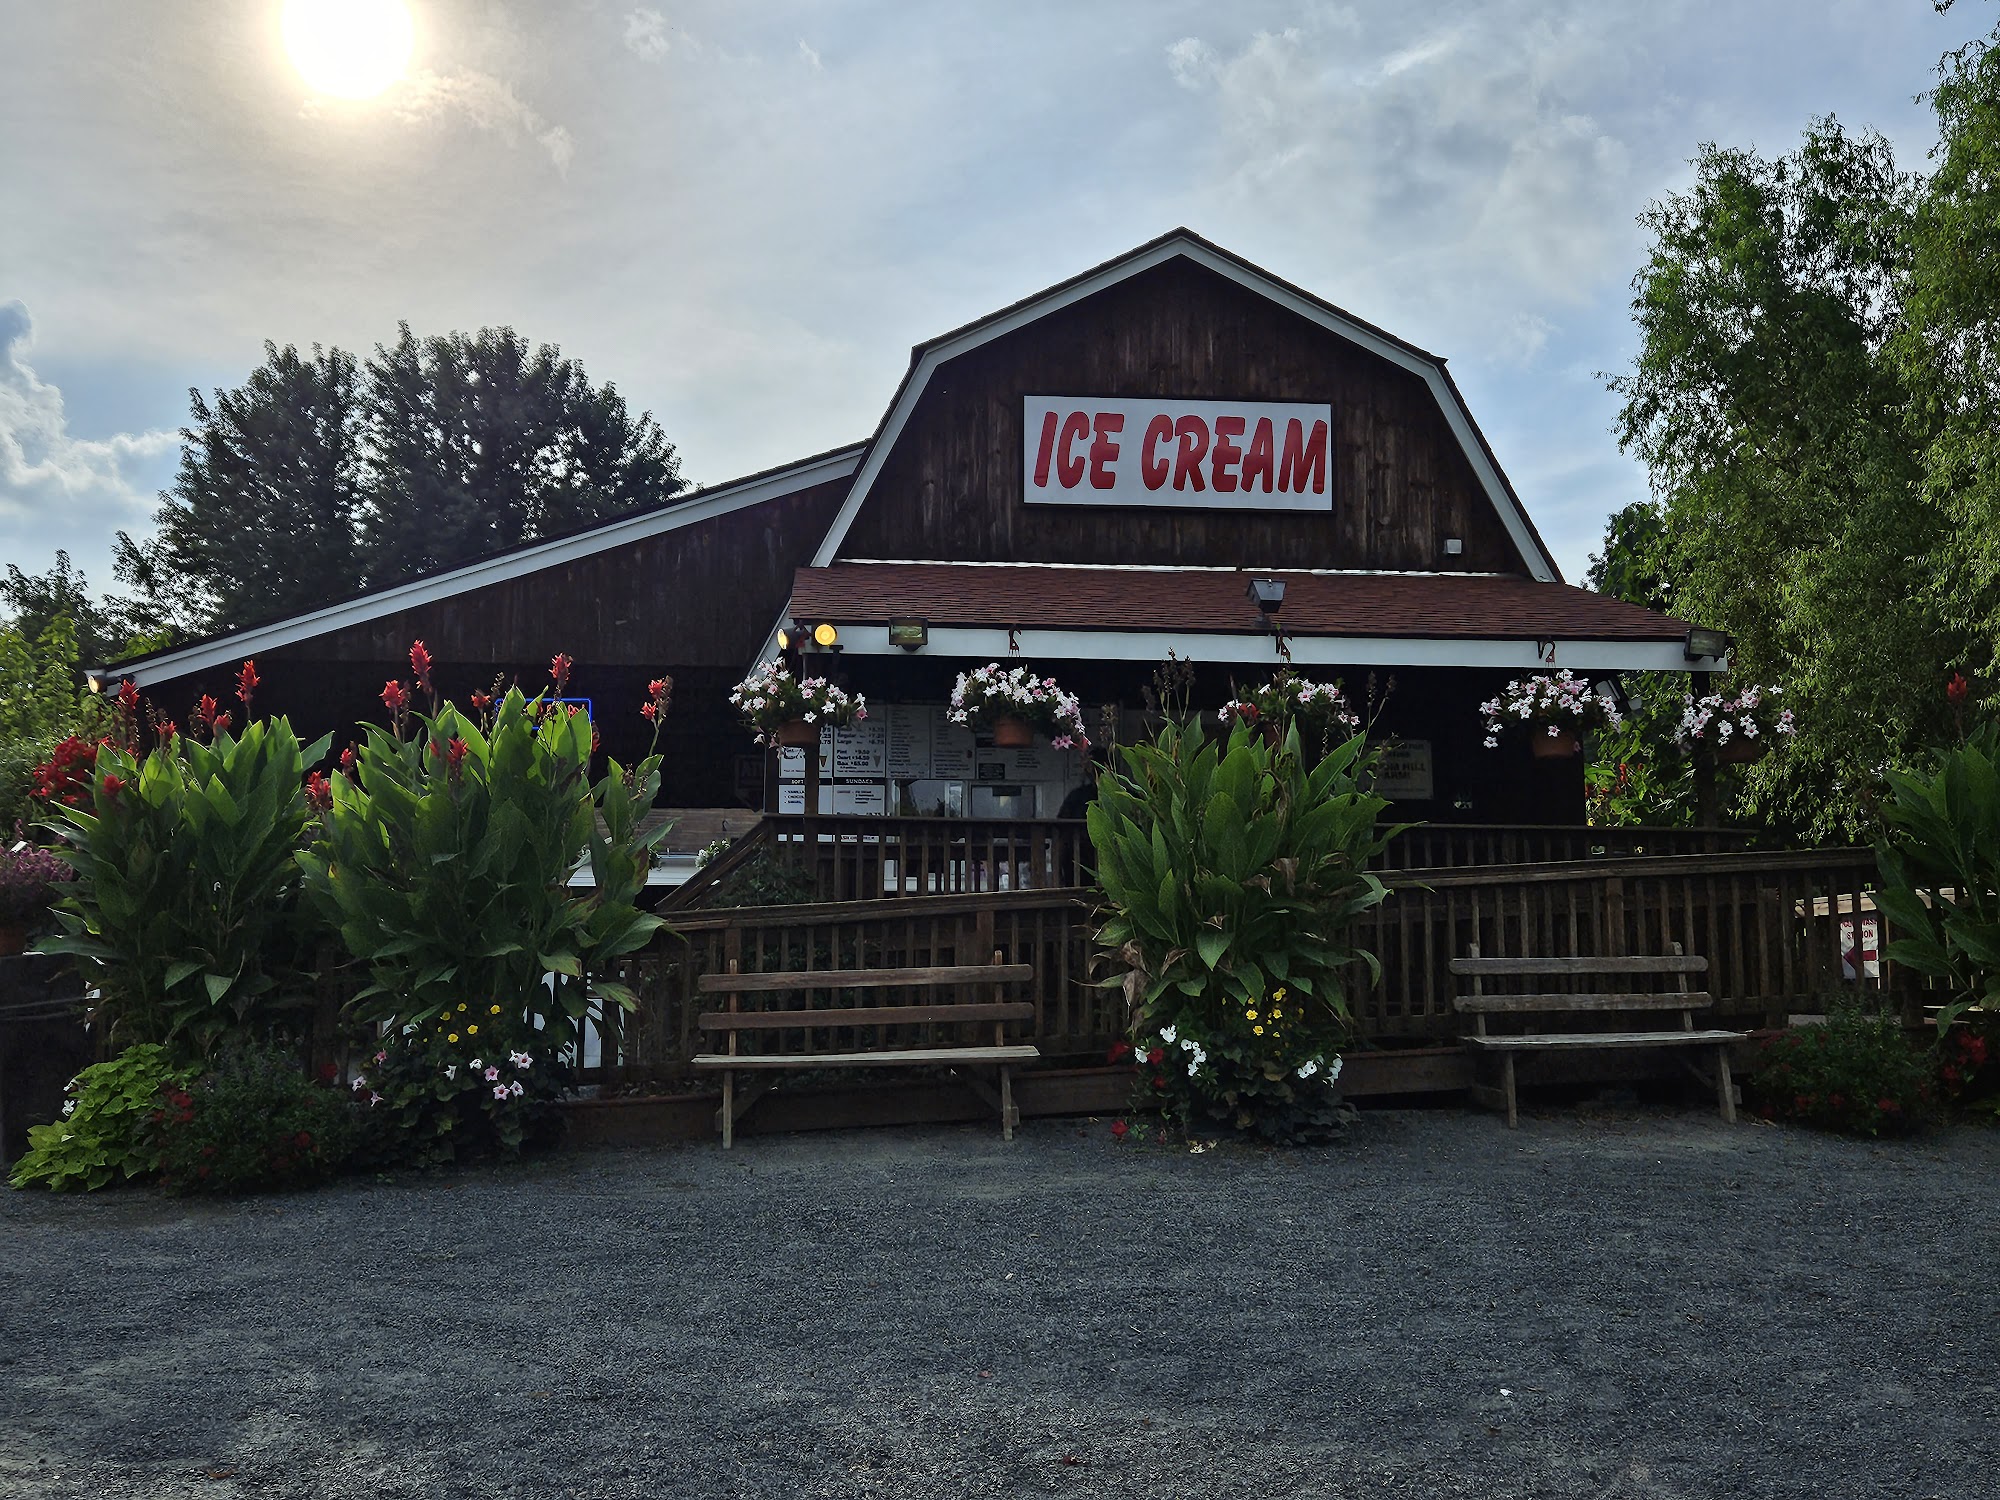 Bloom Hill Farm - Ice Cream